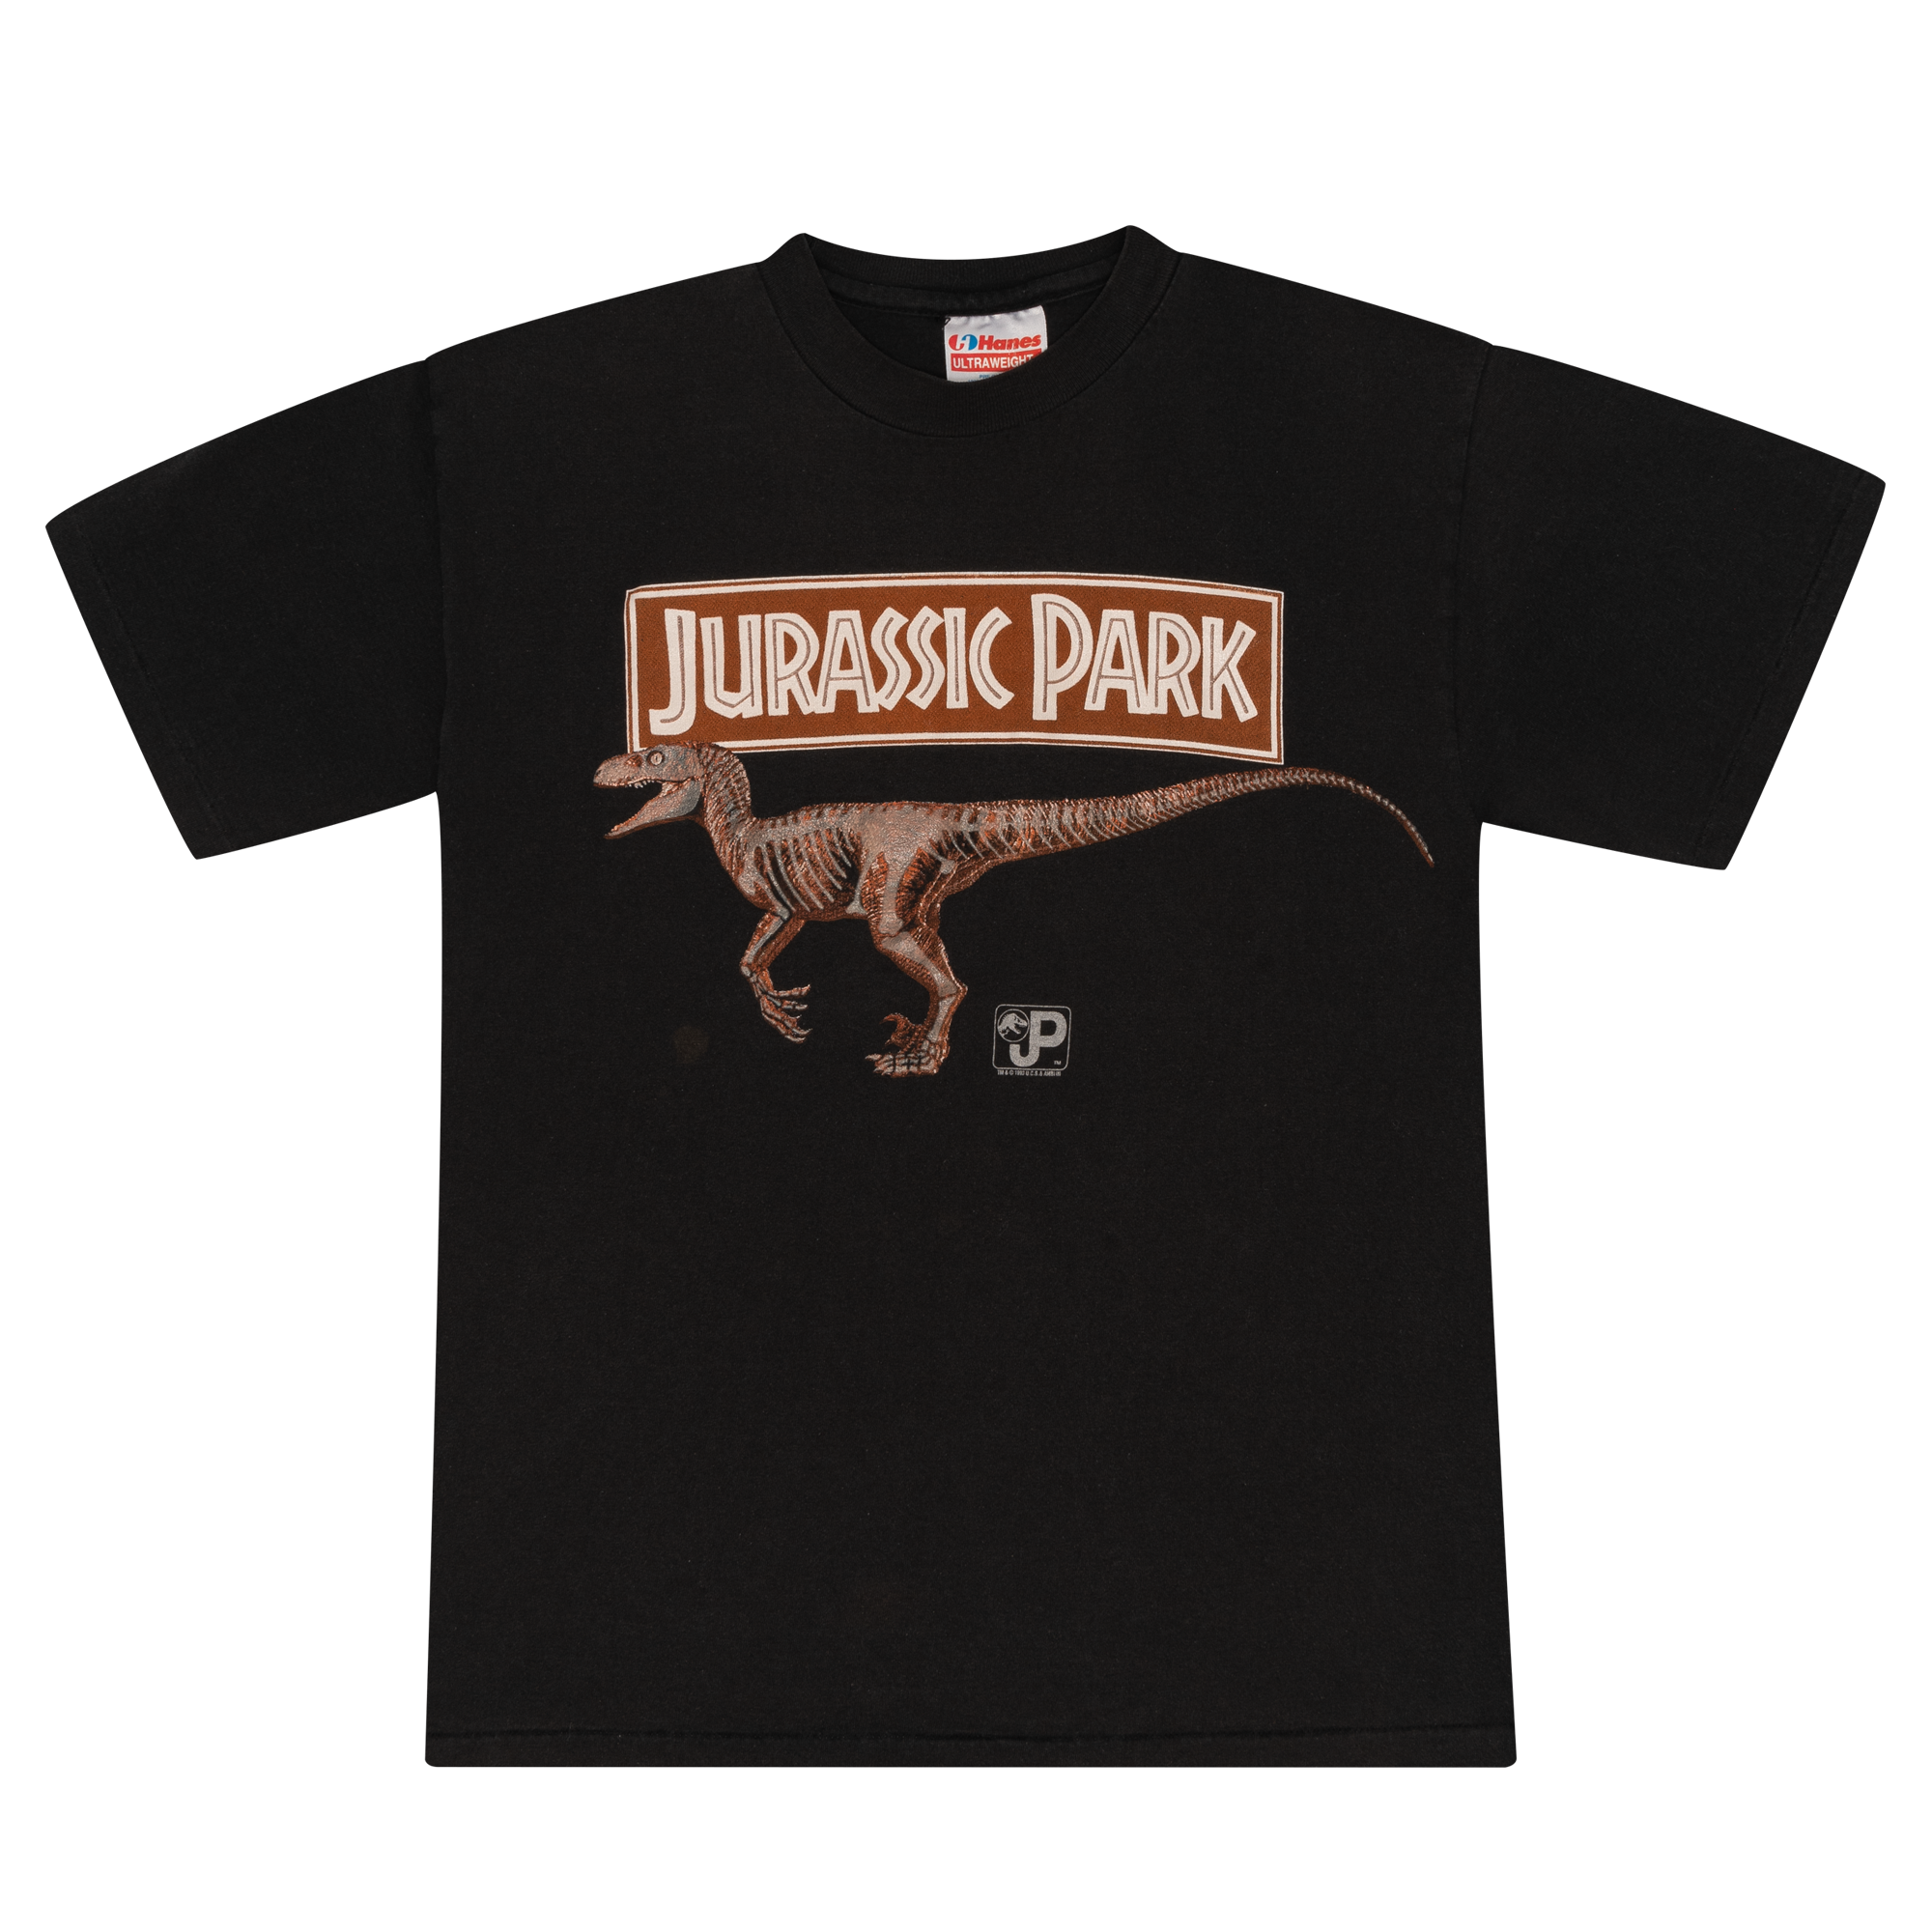 Jurassic Park Movie Promo 1993 Tee Black-PLUS